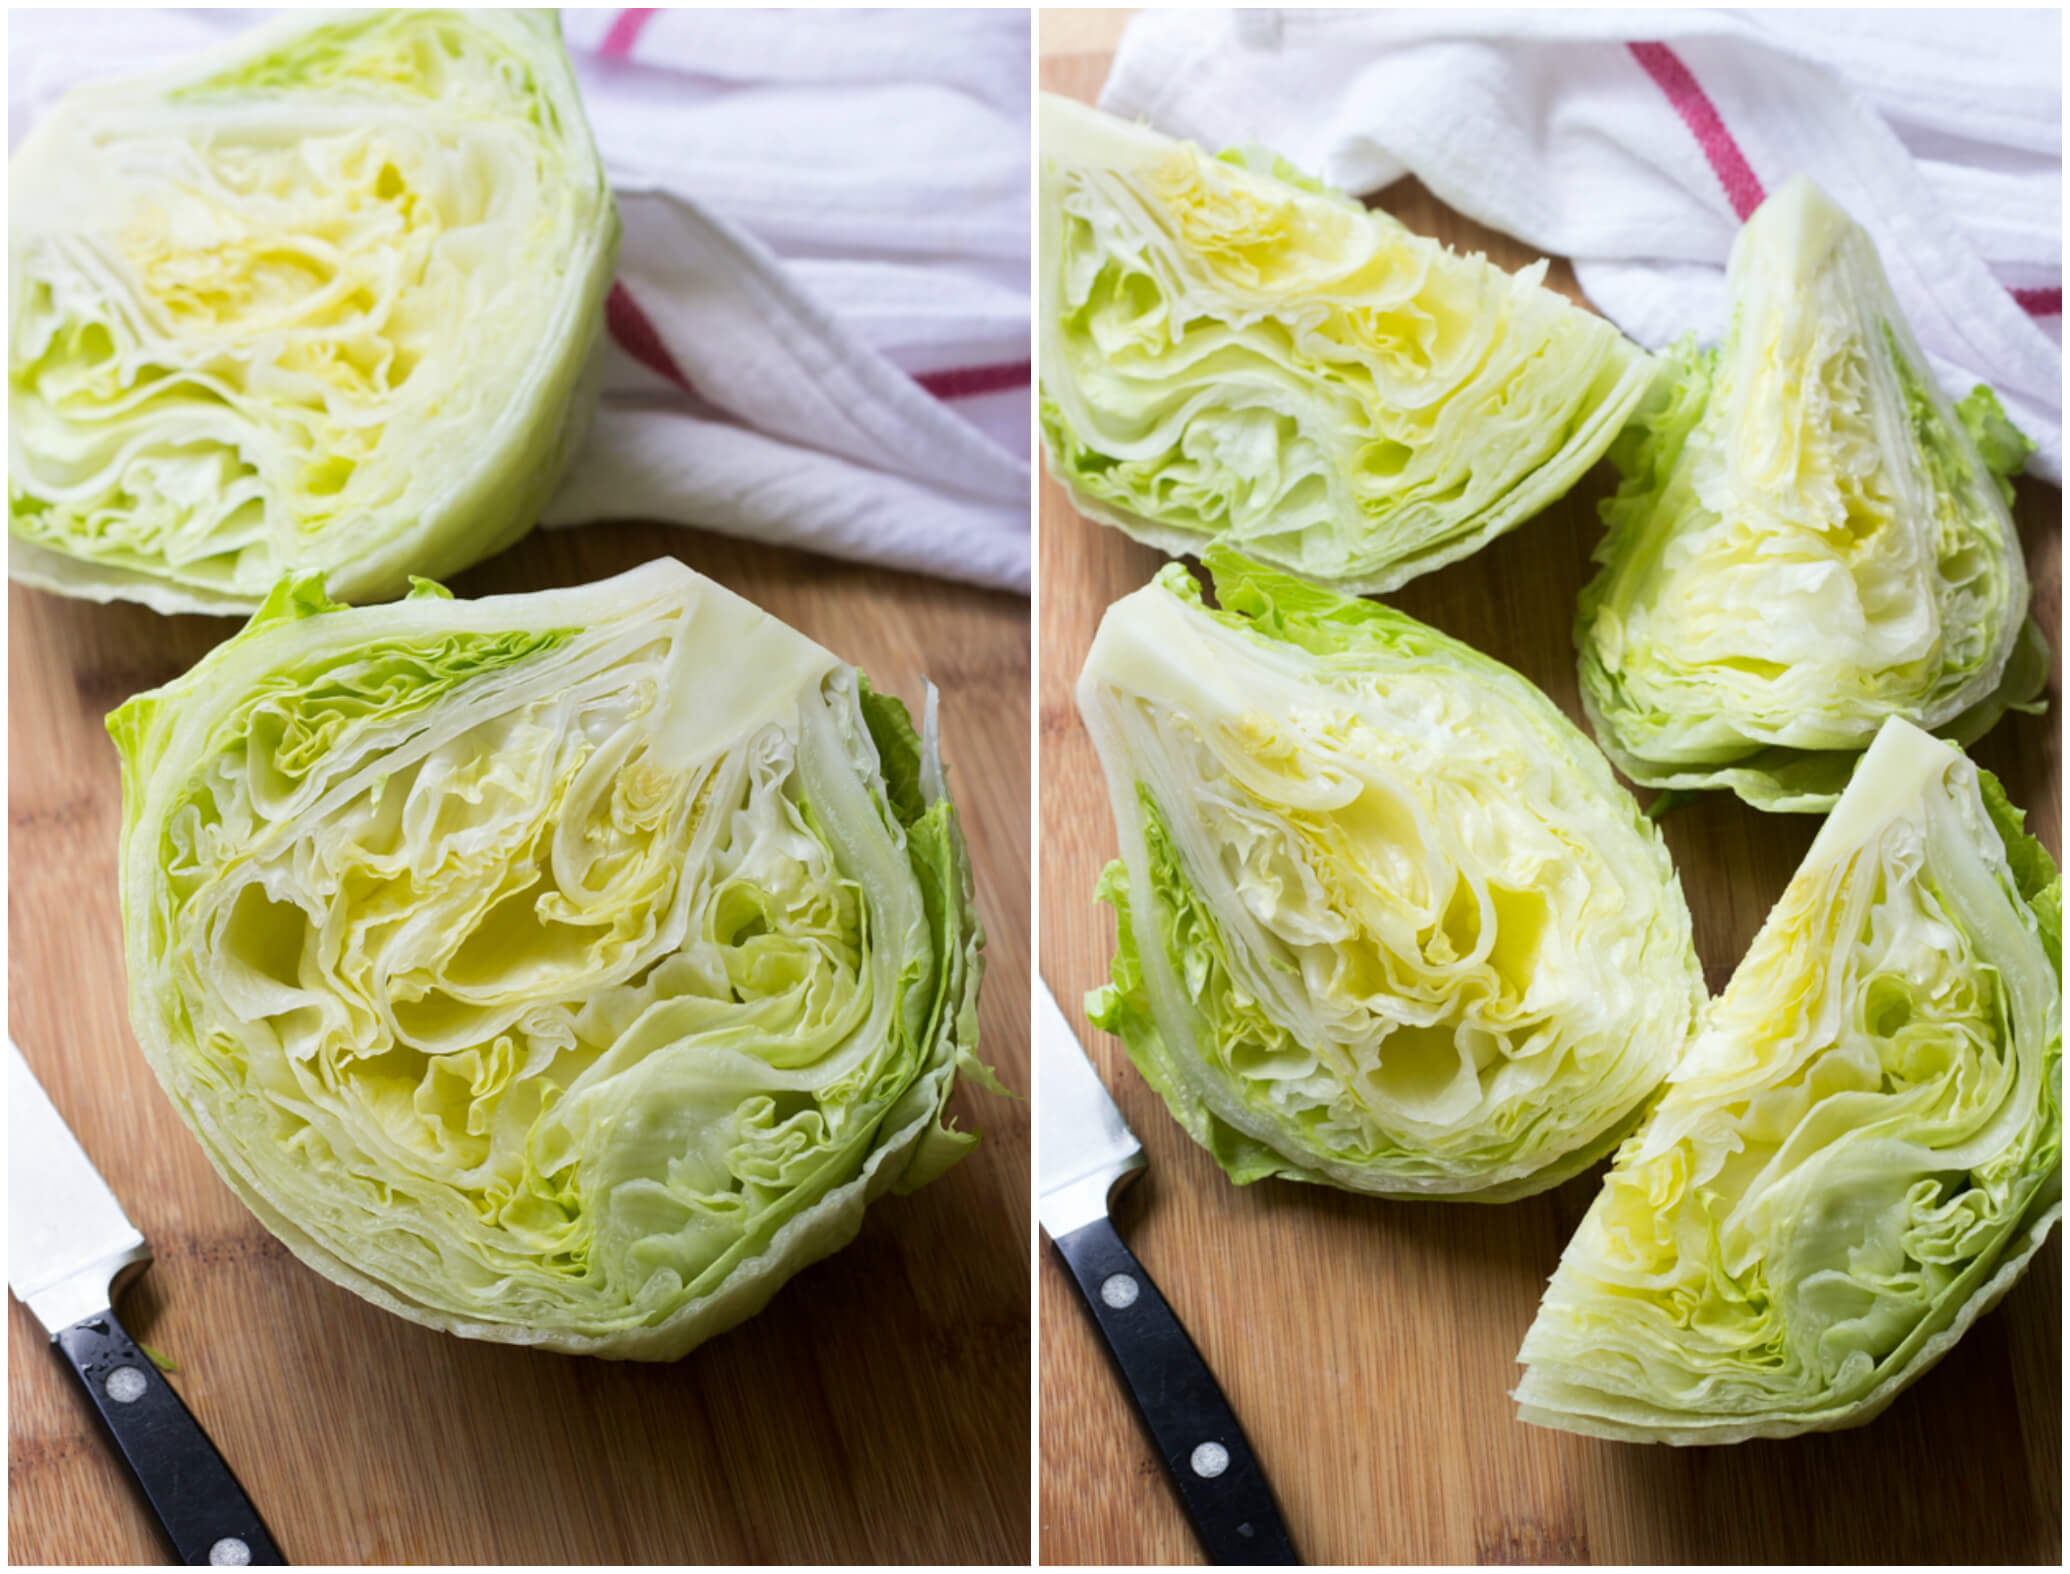 cut up iceberg lettuce